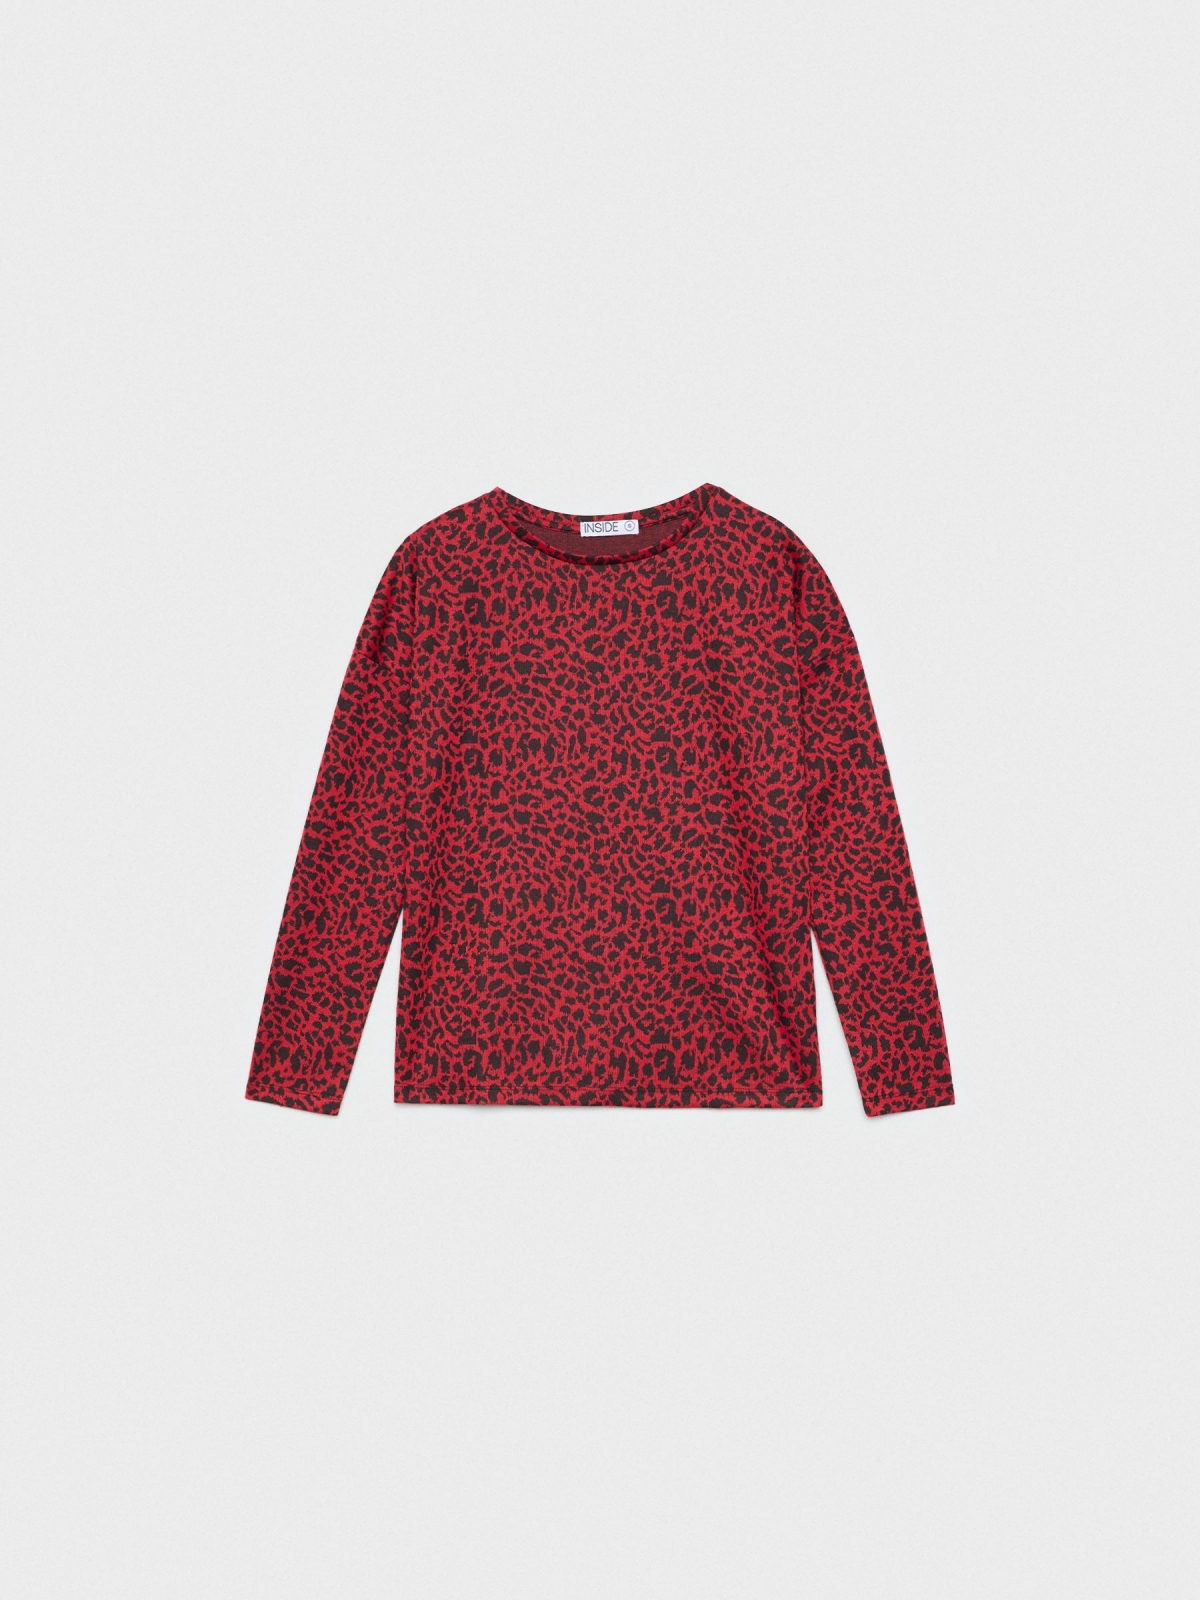  Animal print leopard t-shirt red